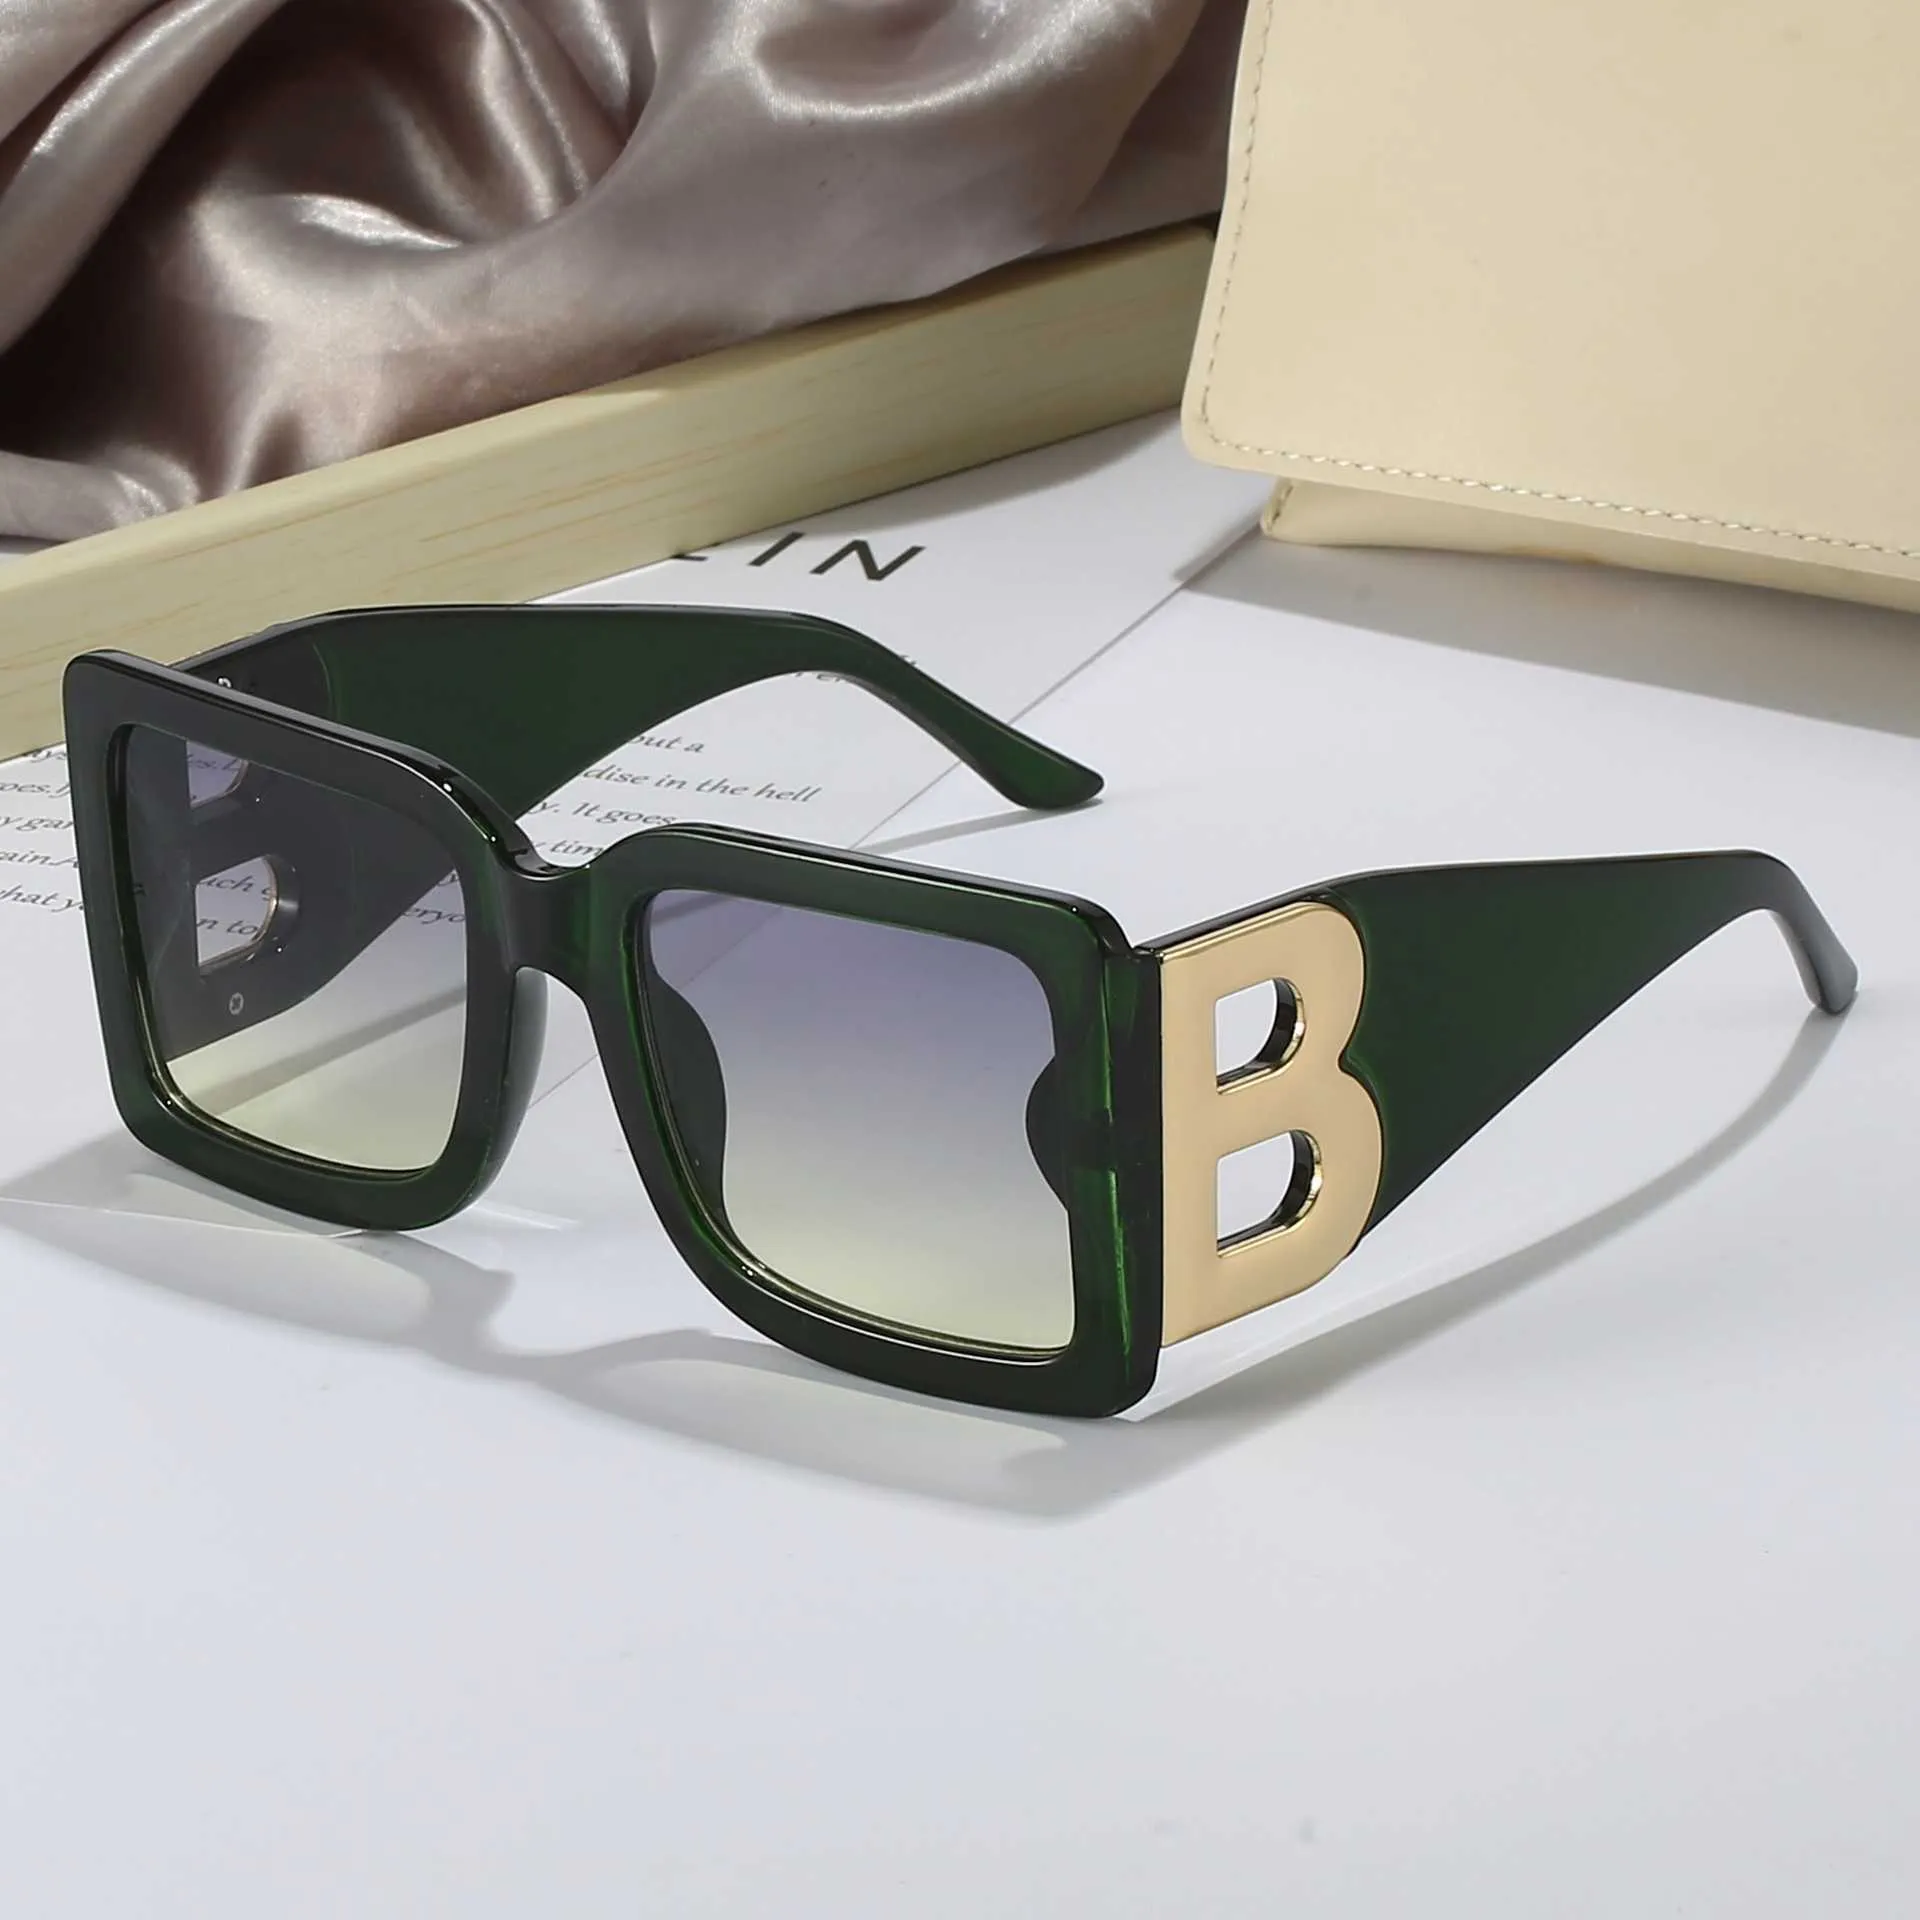 China Fashion Sunglasses 2020 New Arrivals & PC Blue light blocking glasses  Manufacturer